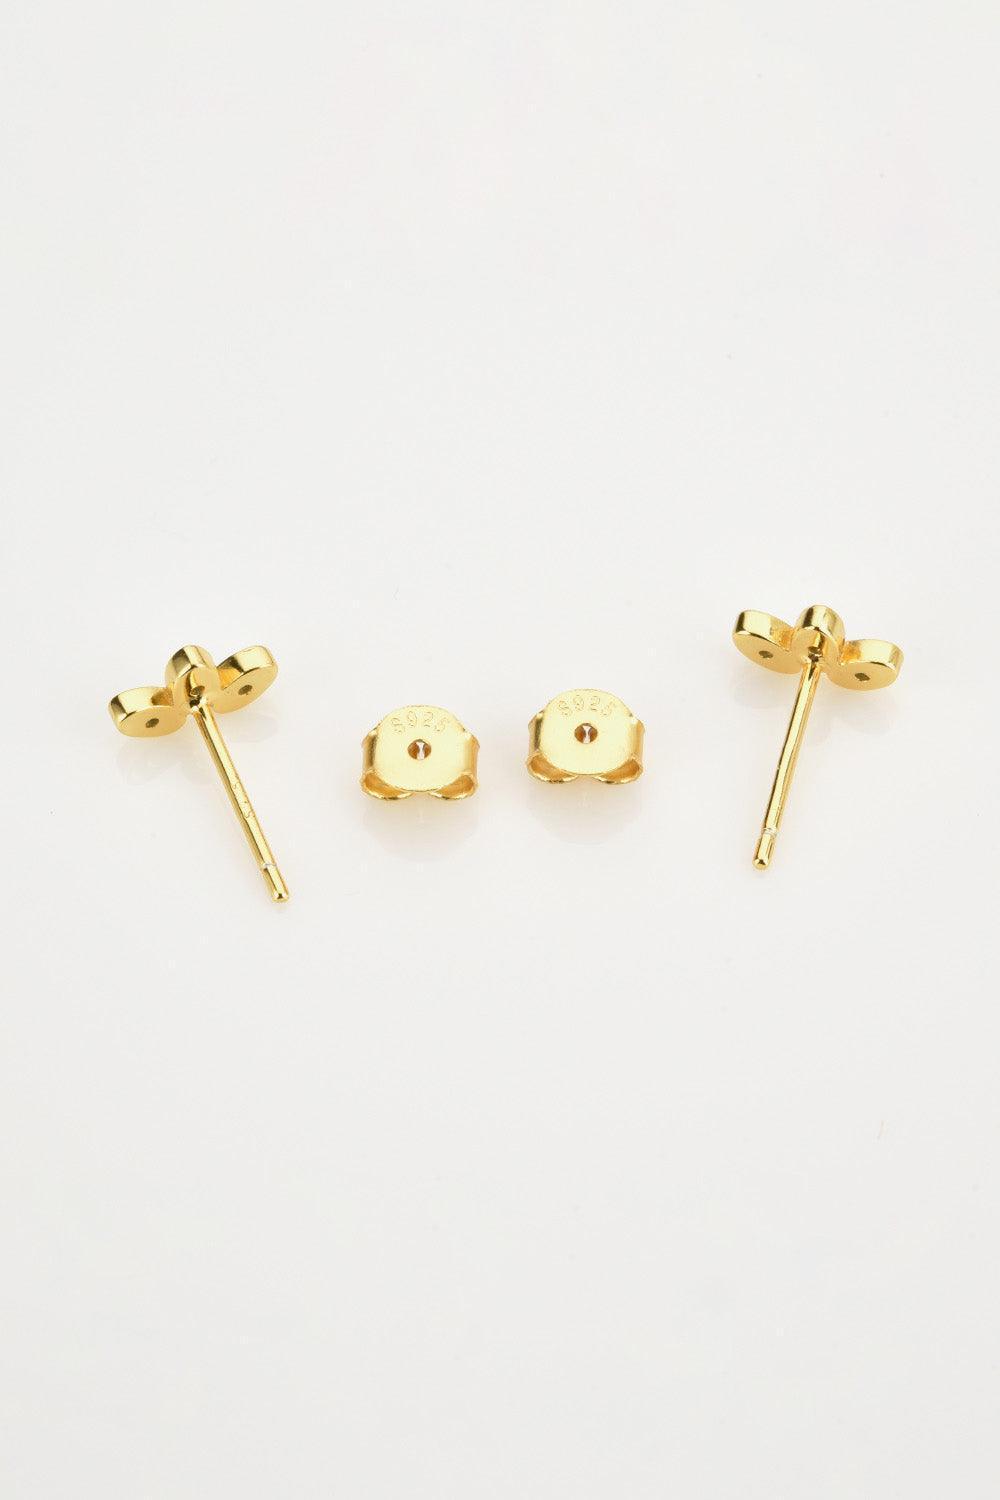 Grateful Inlaid Zircon Gold Plated Stud Earrings - MXSTUDIO.COM